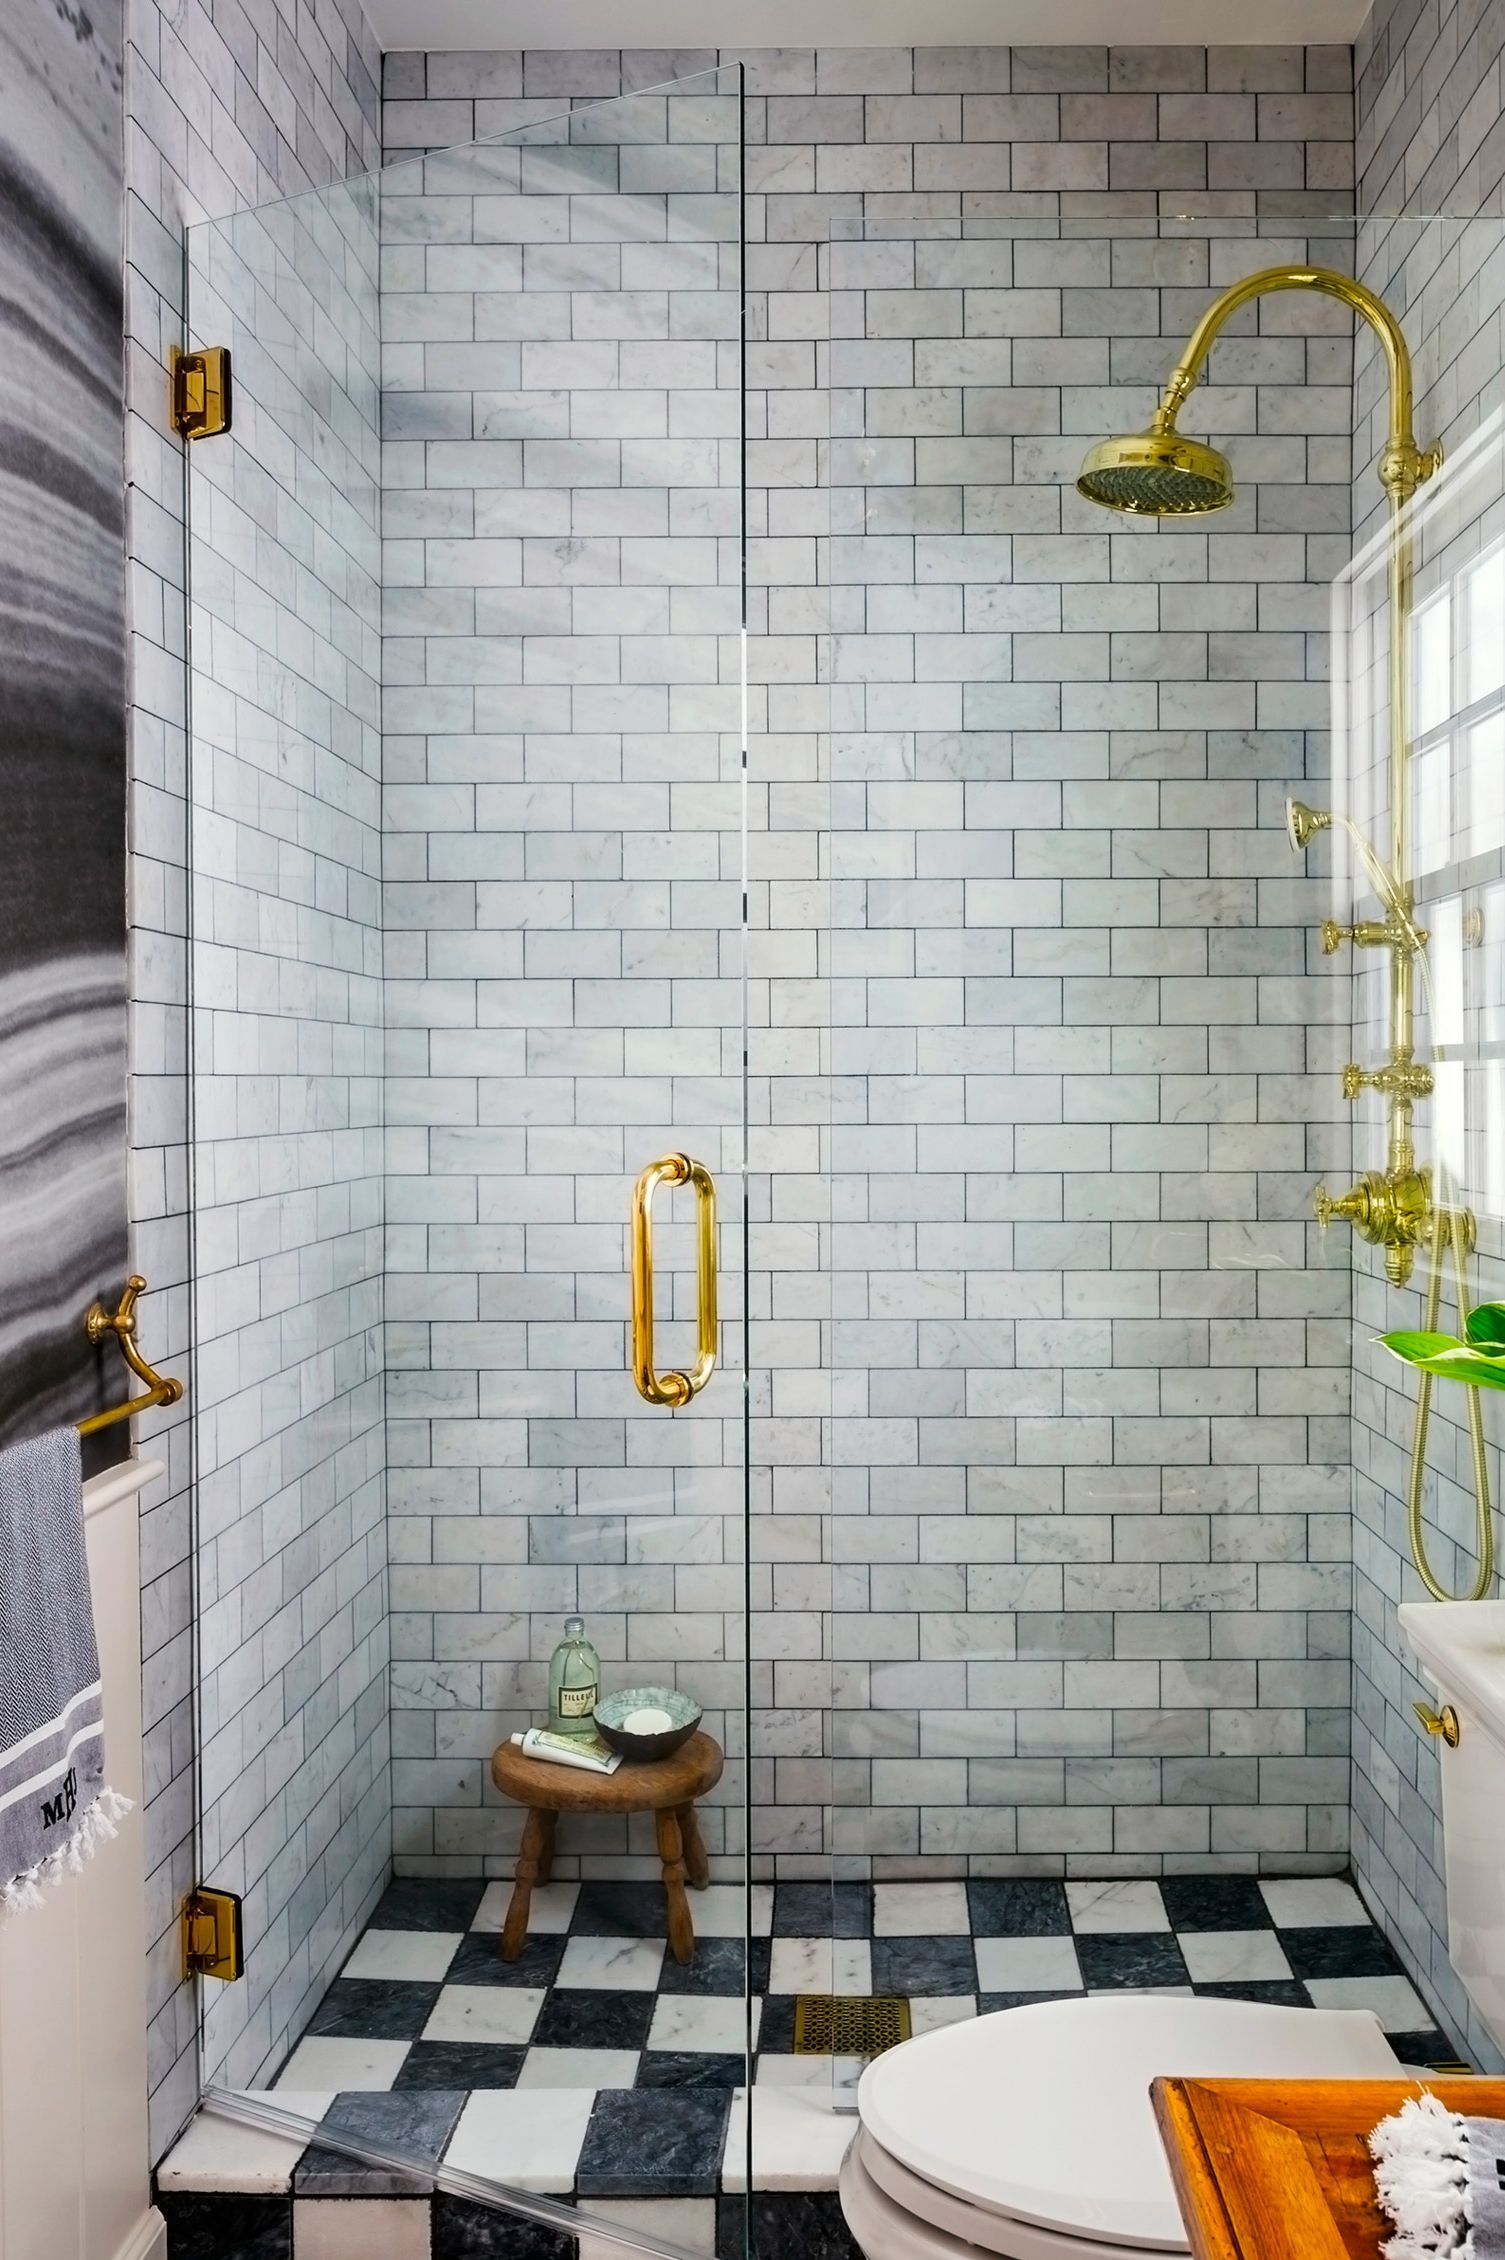 Bathroom With Hexagon Tile Walls With Images Bathroom Wall